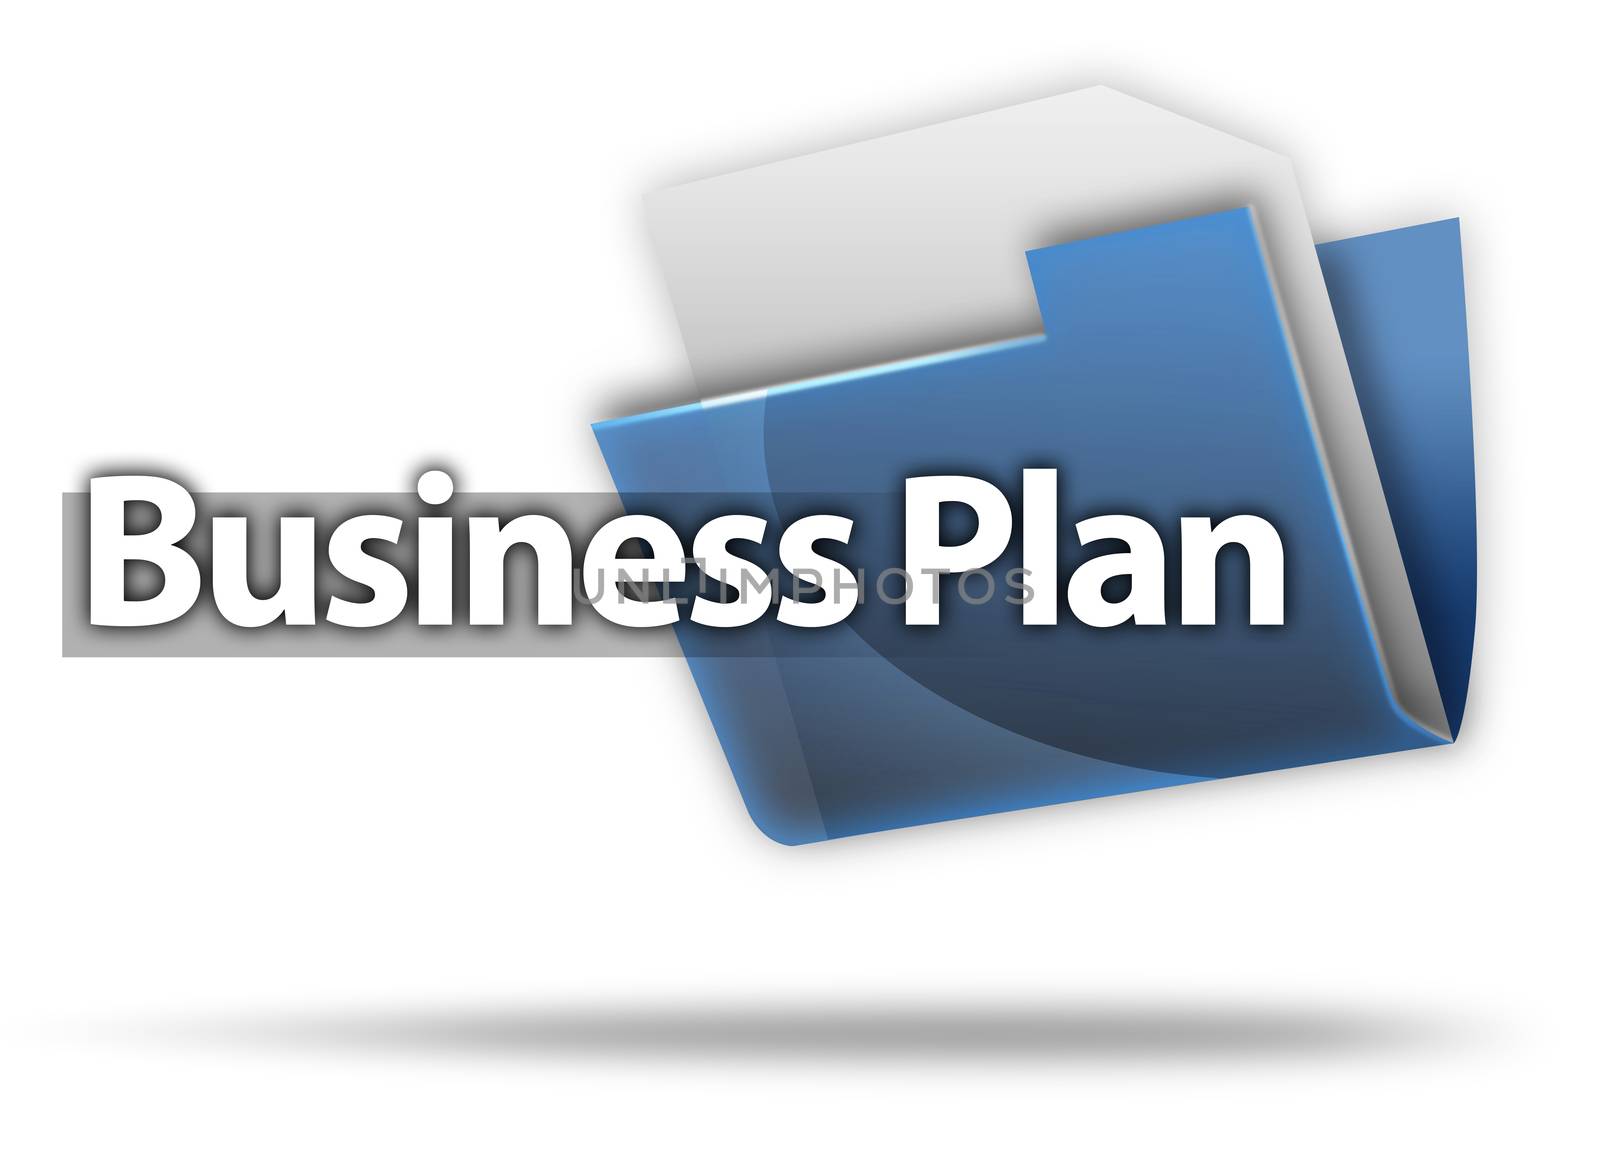 3D Style Folder Icon "Business Plan"